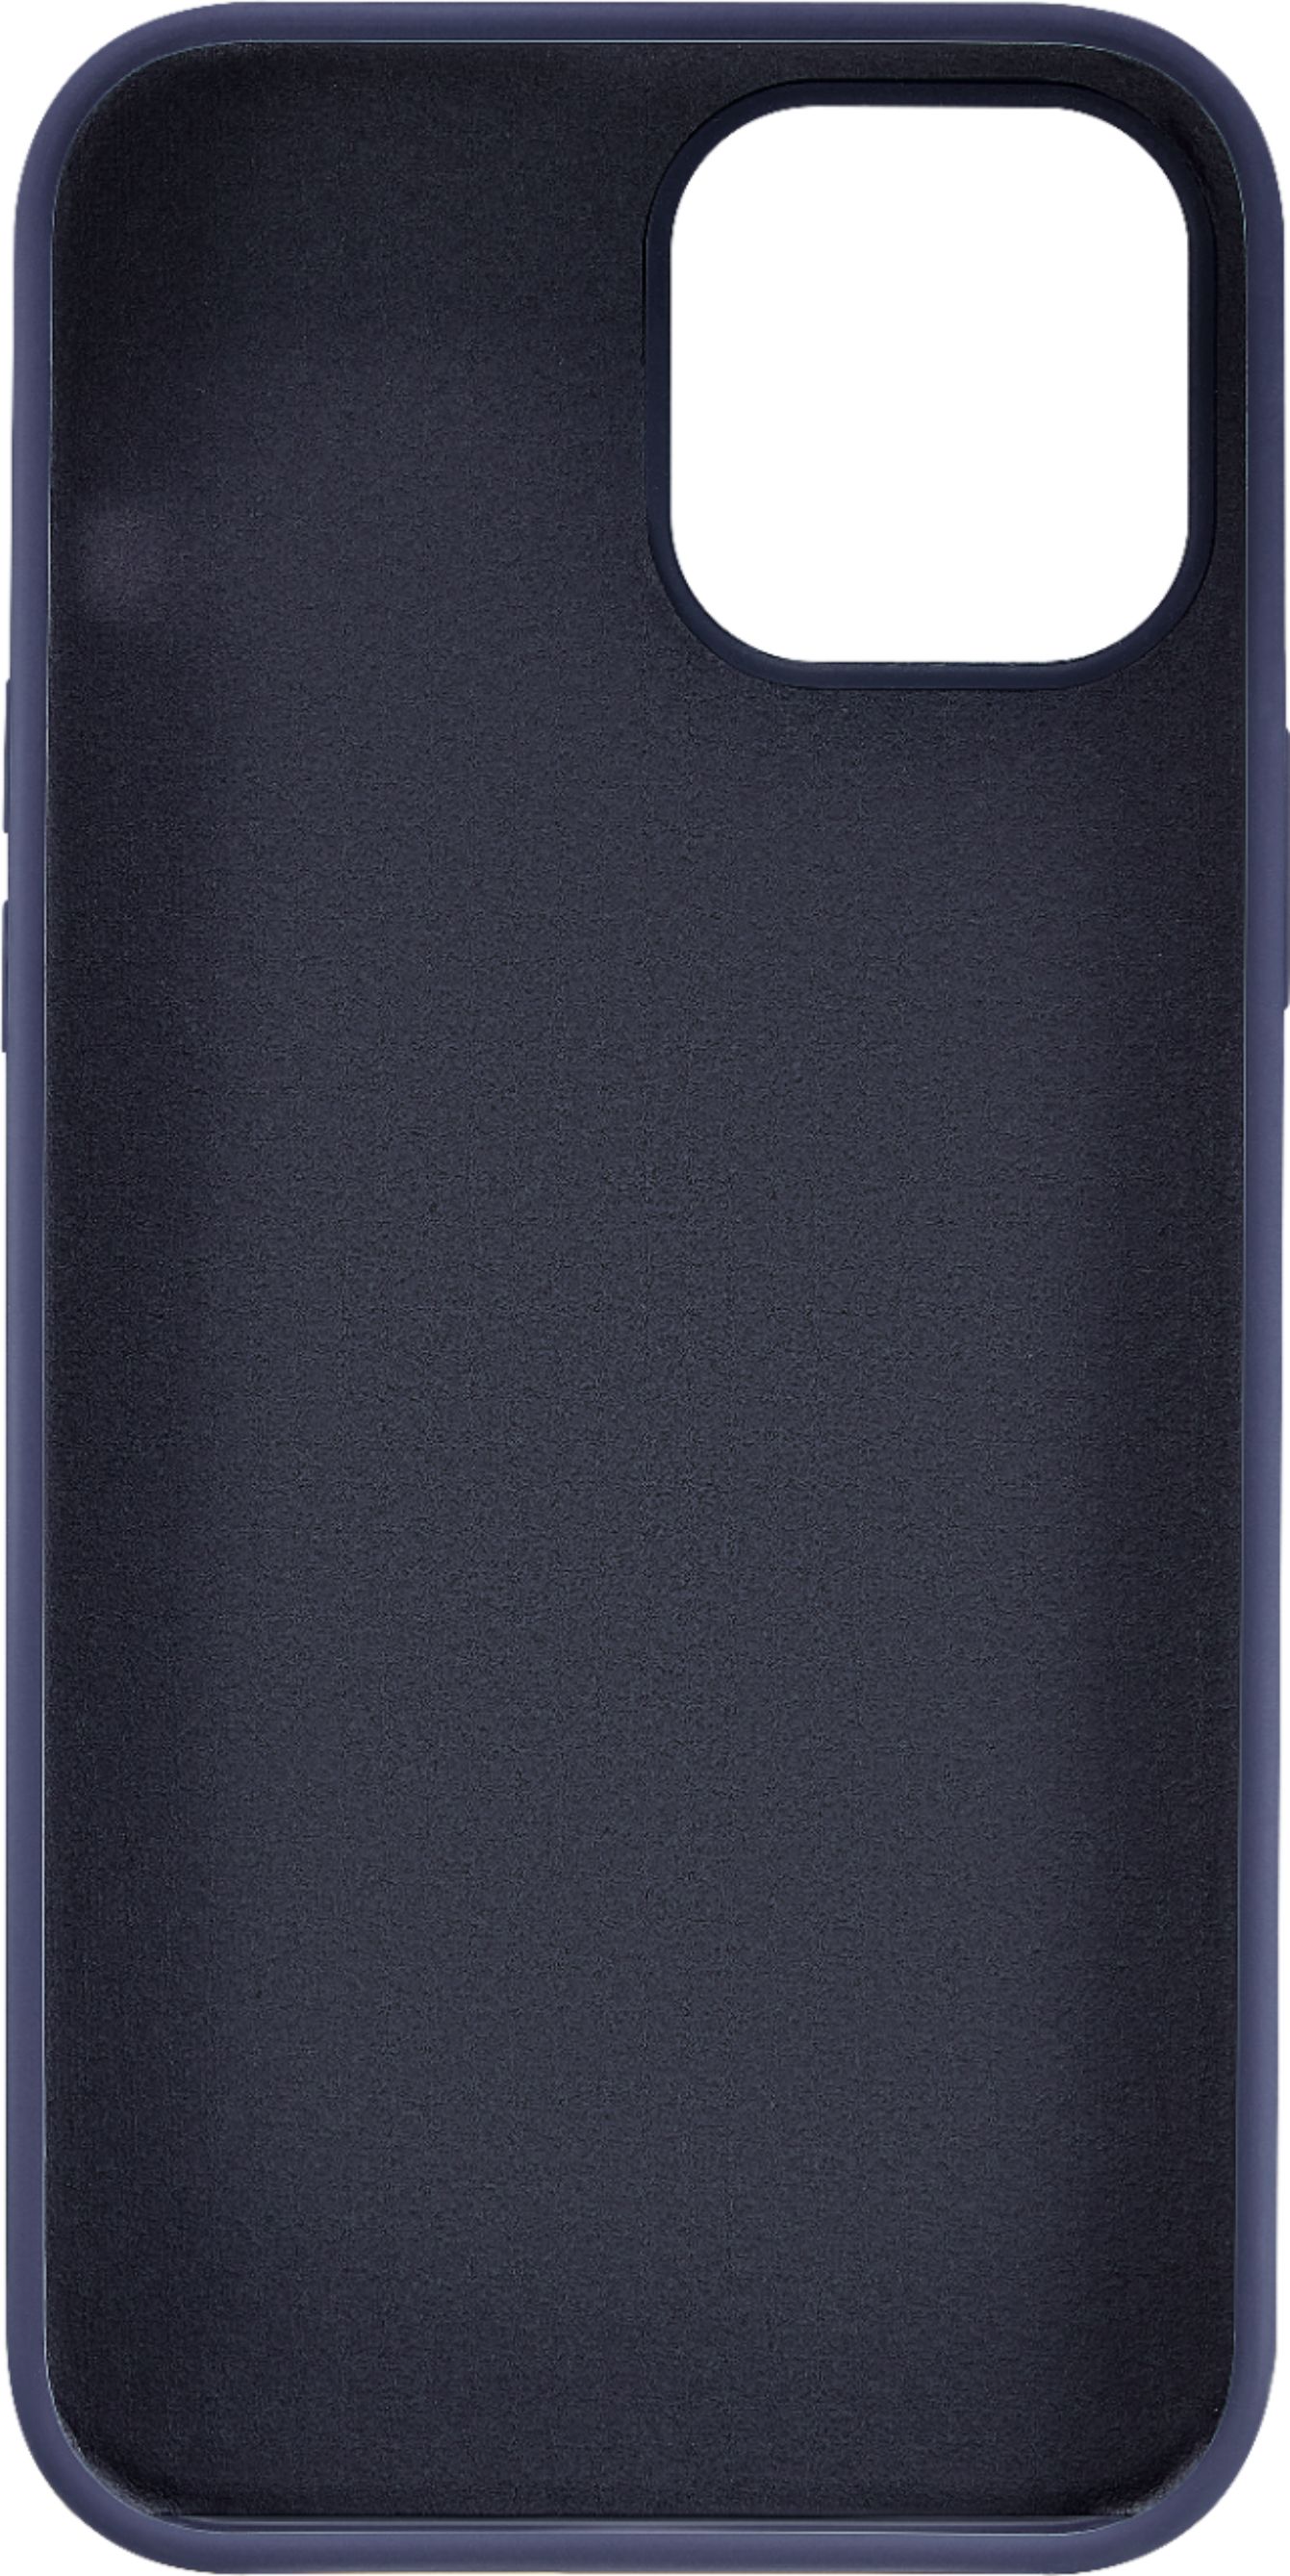 Buy Proporta iPhone 12, 12 Pro Phone Case - Black